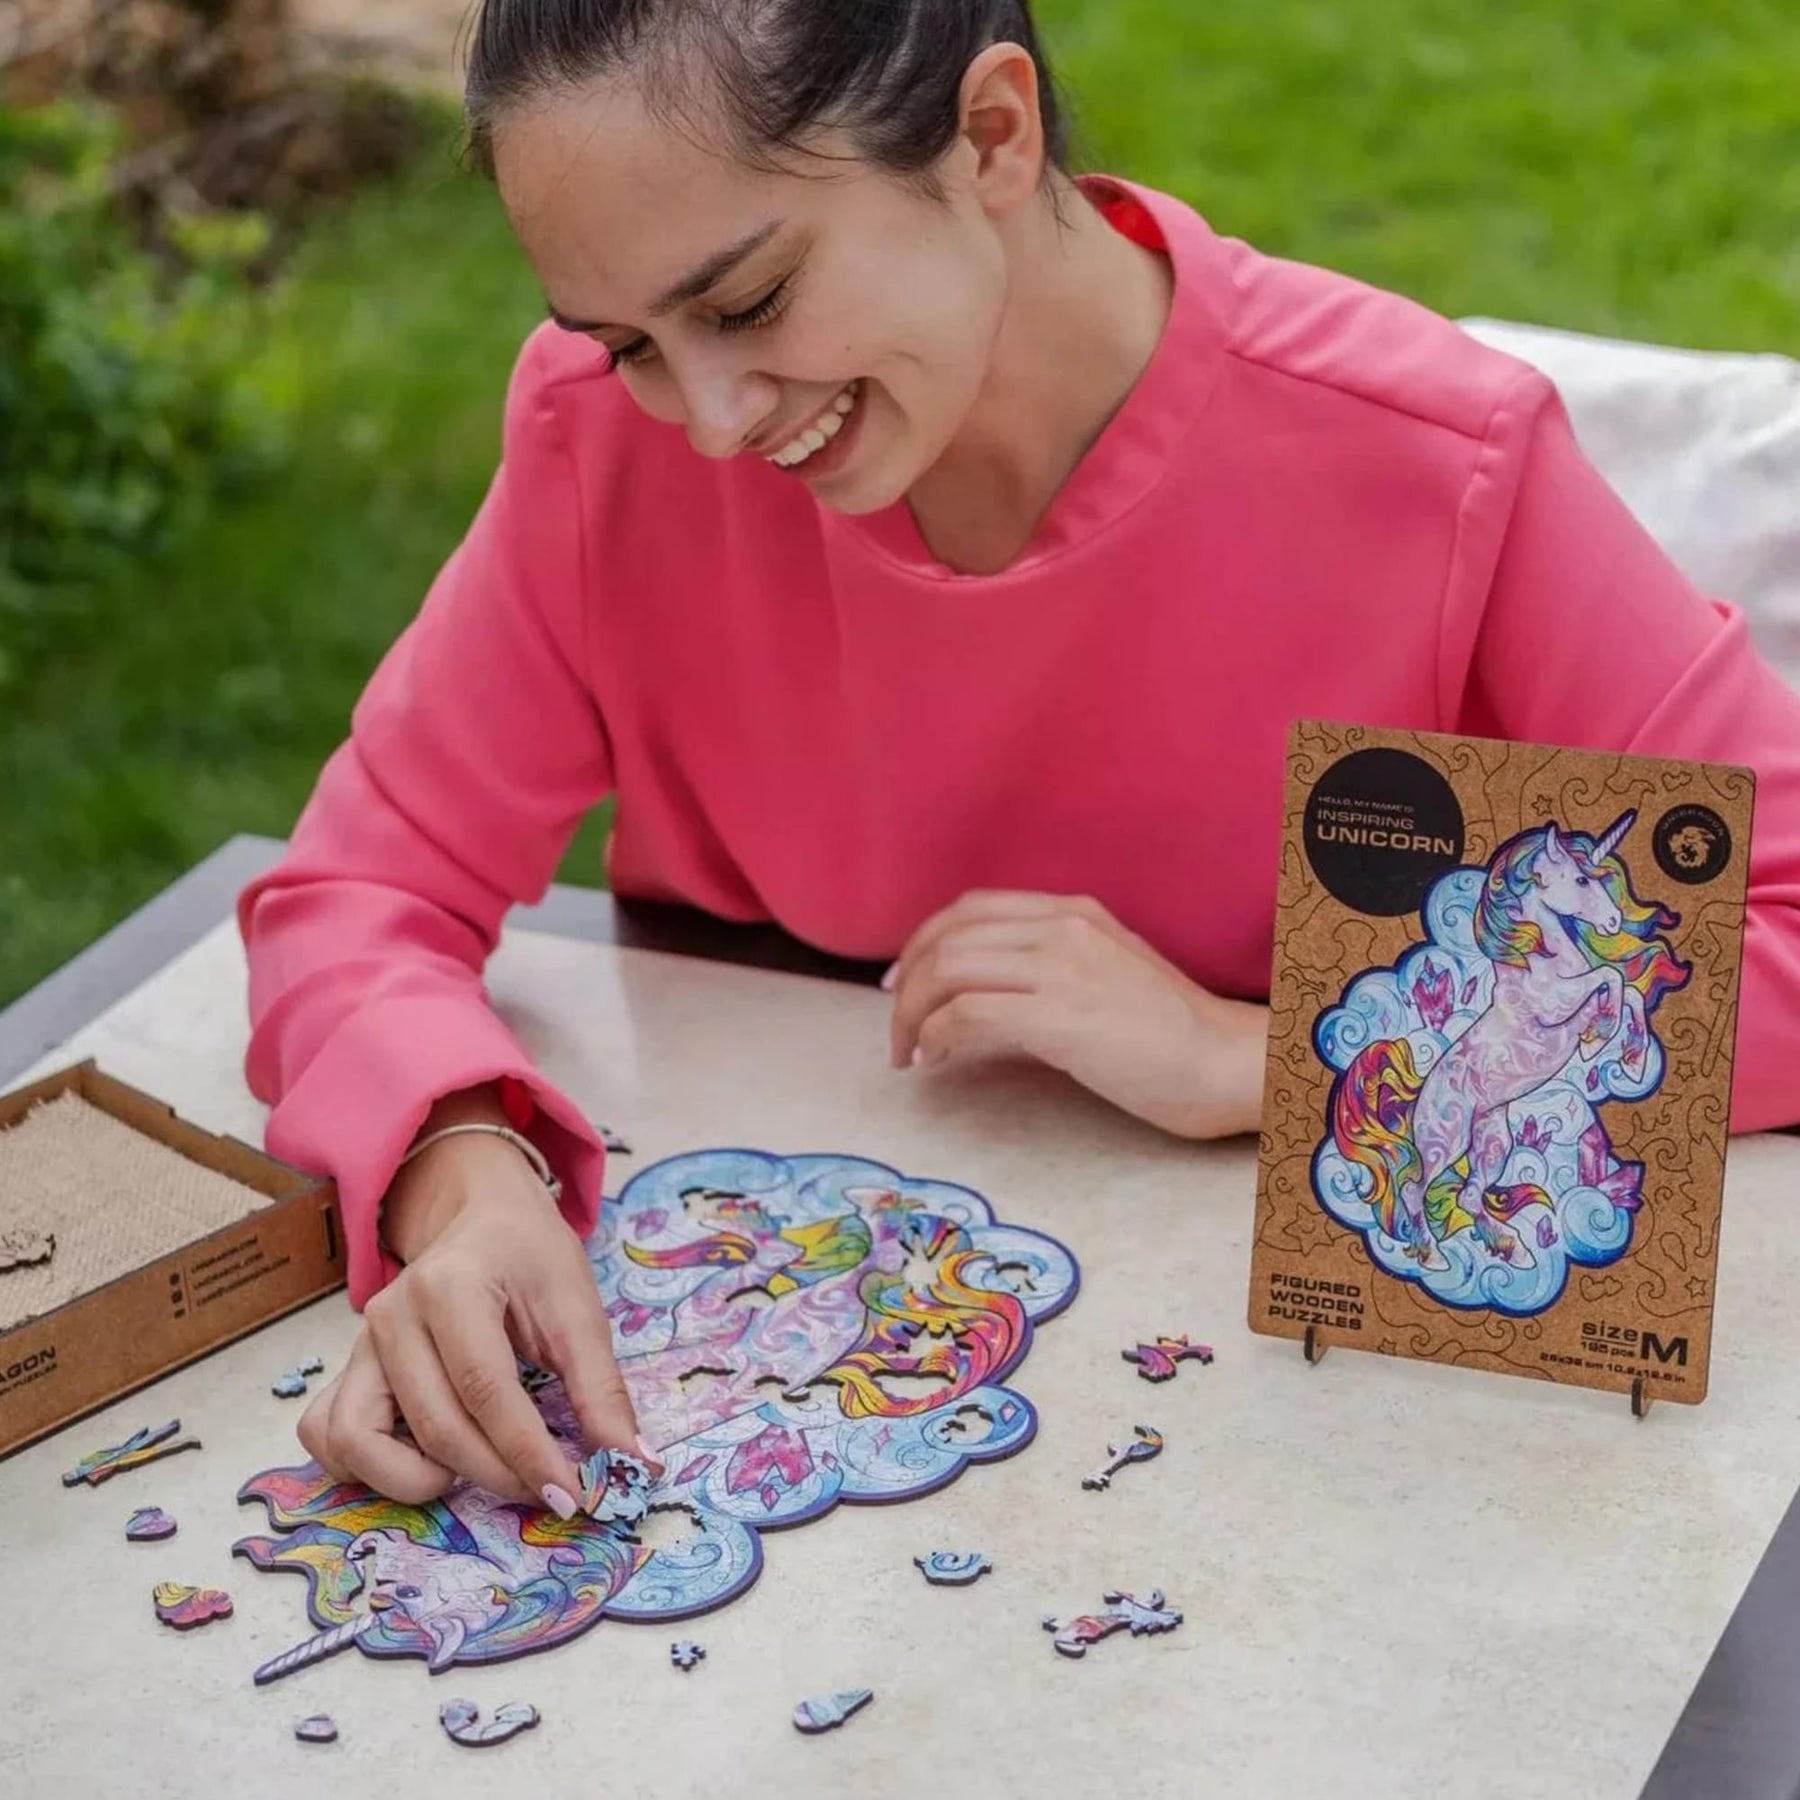 Inspiring Unicorn 195 Piece Shaped Wooden Jigsaw Puzzle